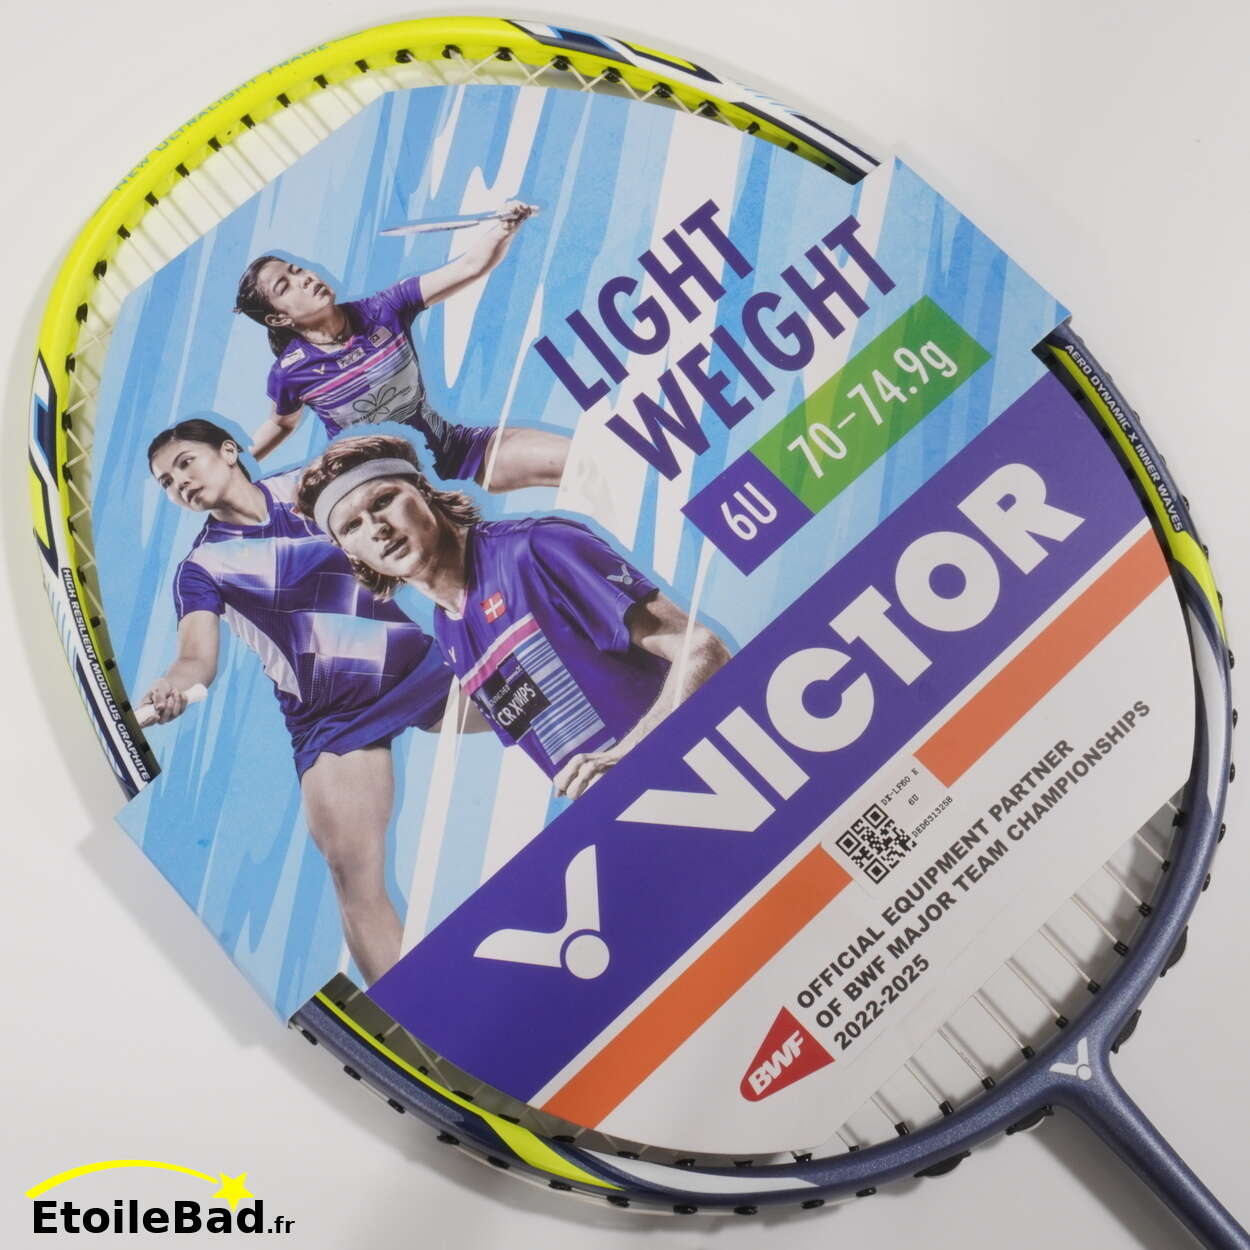 Victor DriveX Light Fighter 60